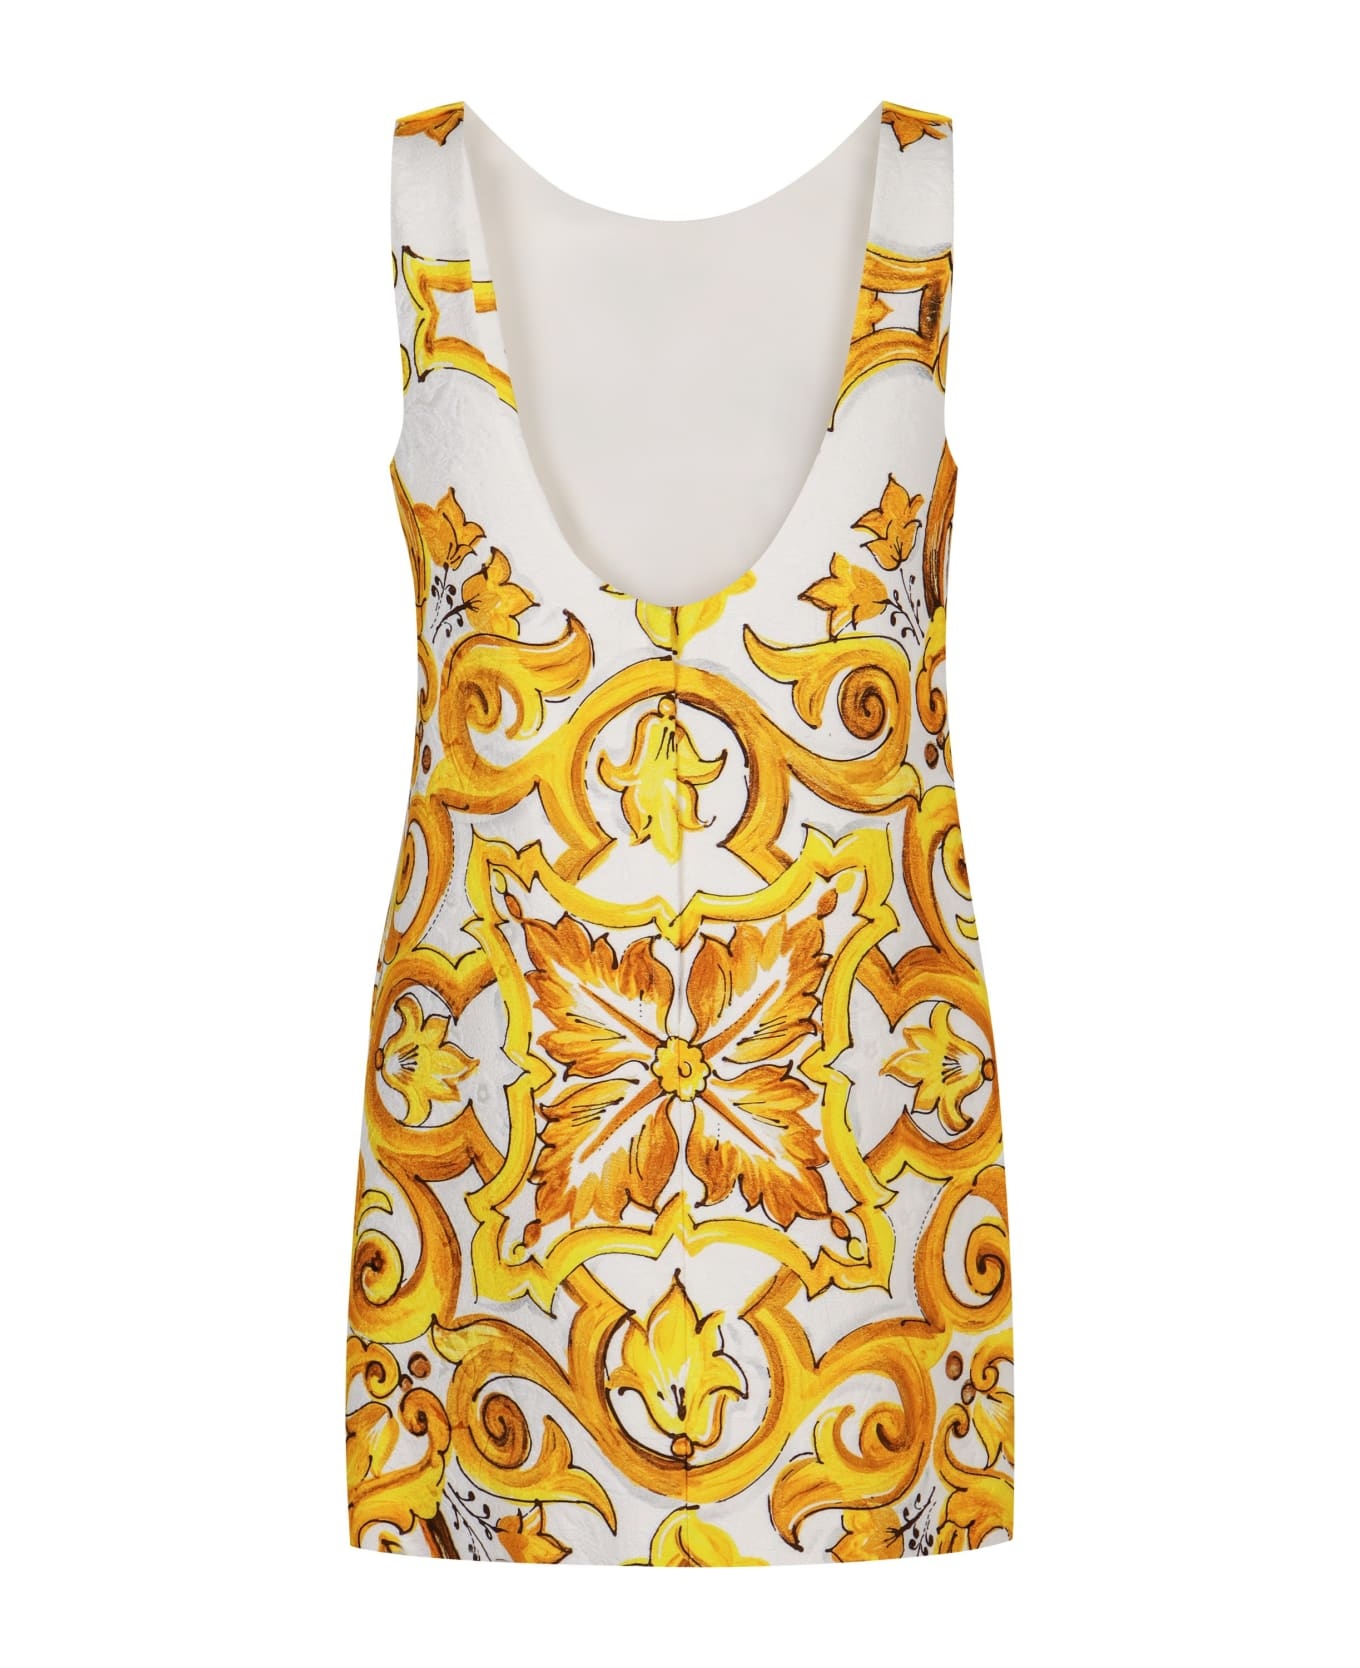 Brocade Patterned Dress - 2